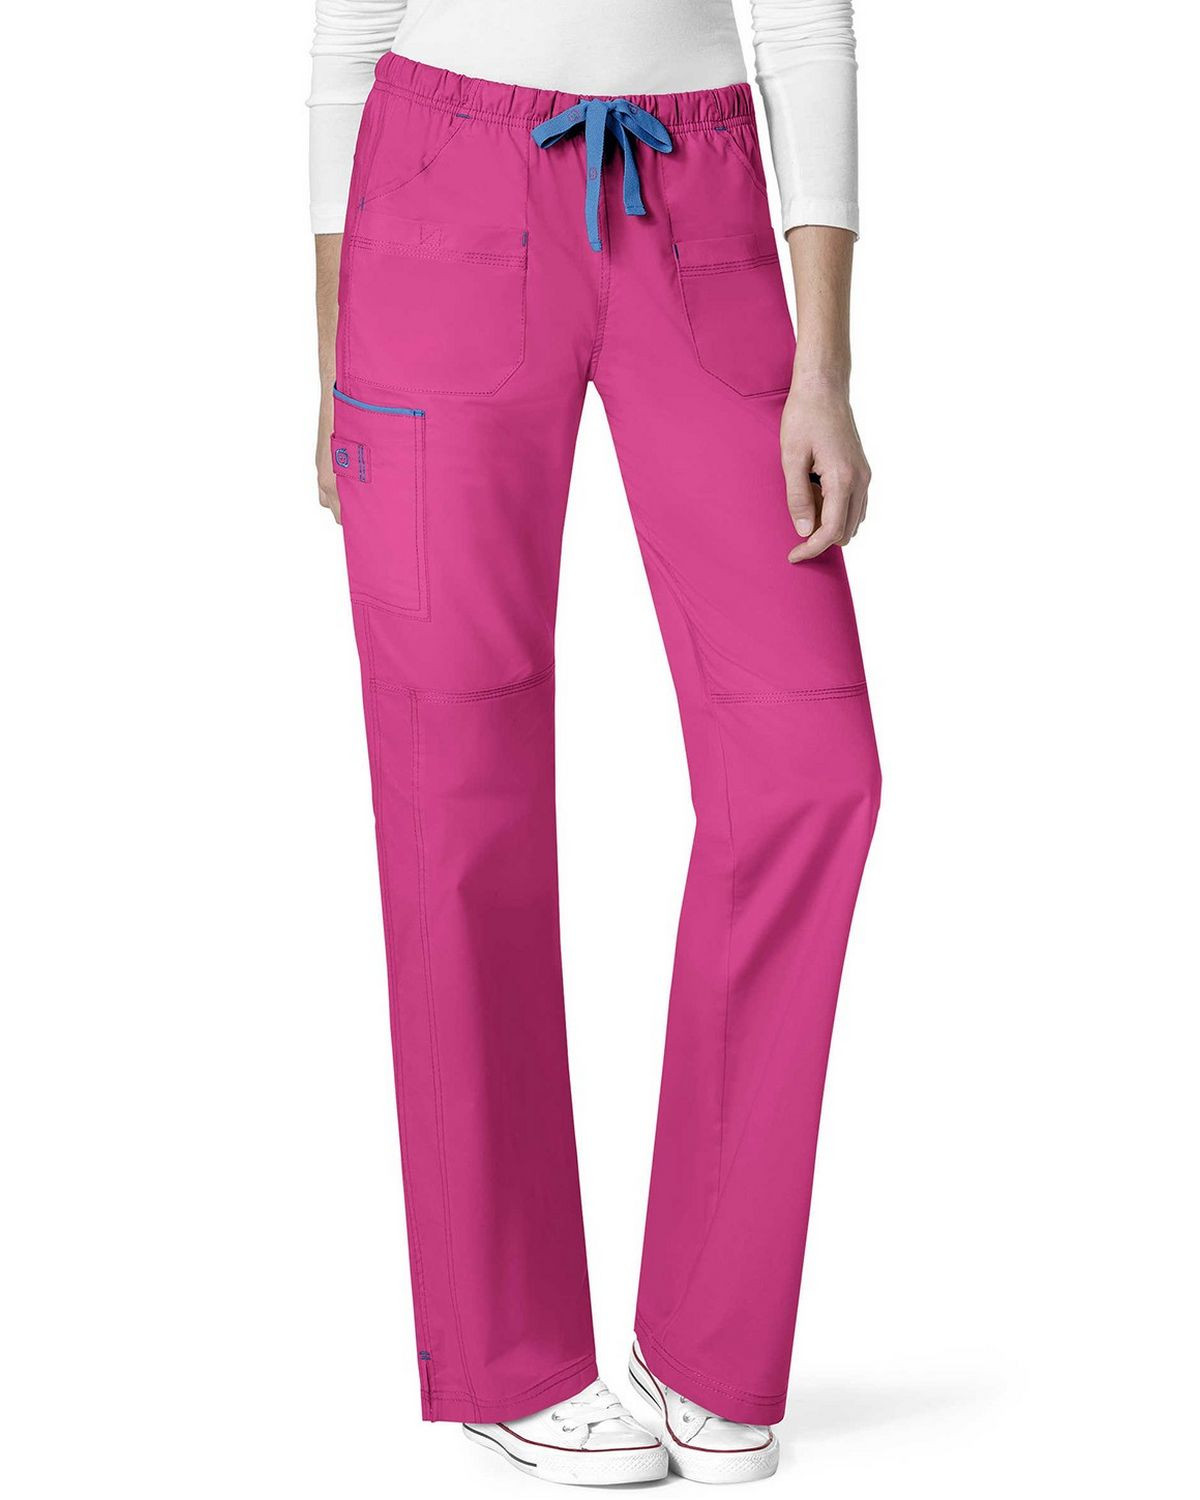 Wonderwink 5508T Women's Tall Joy-Denim Style Straight Pant - Hot Pink - XLT #denim